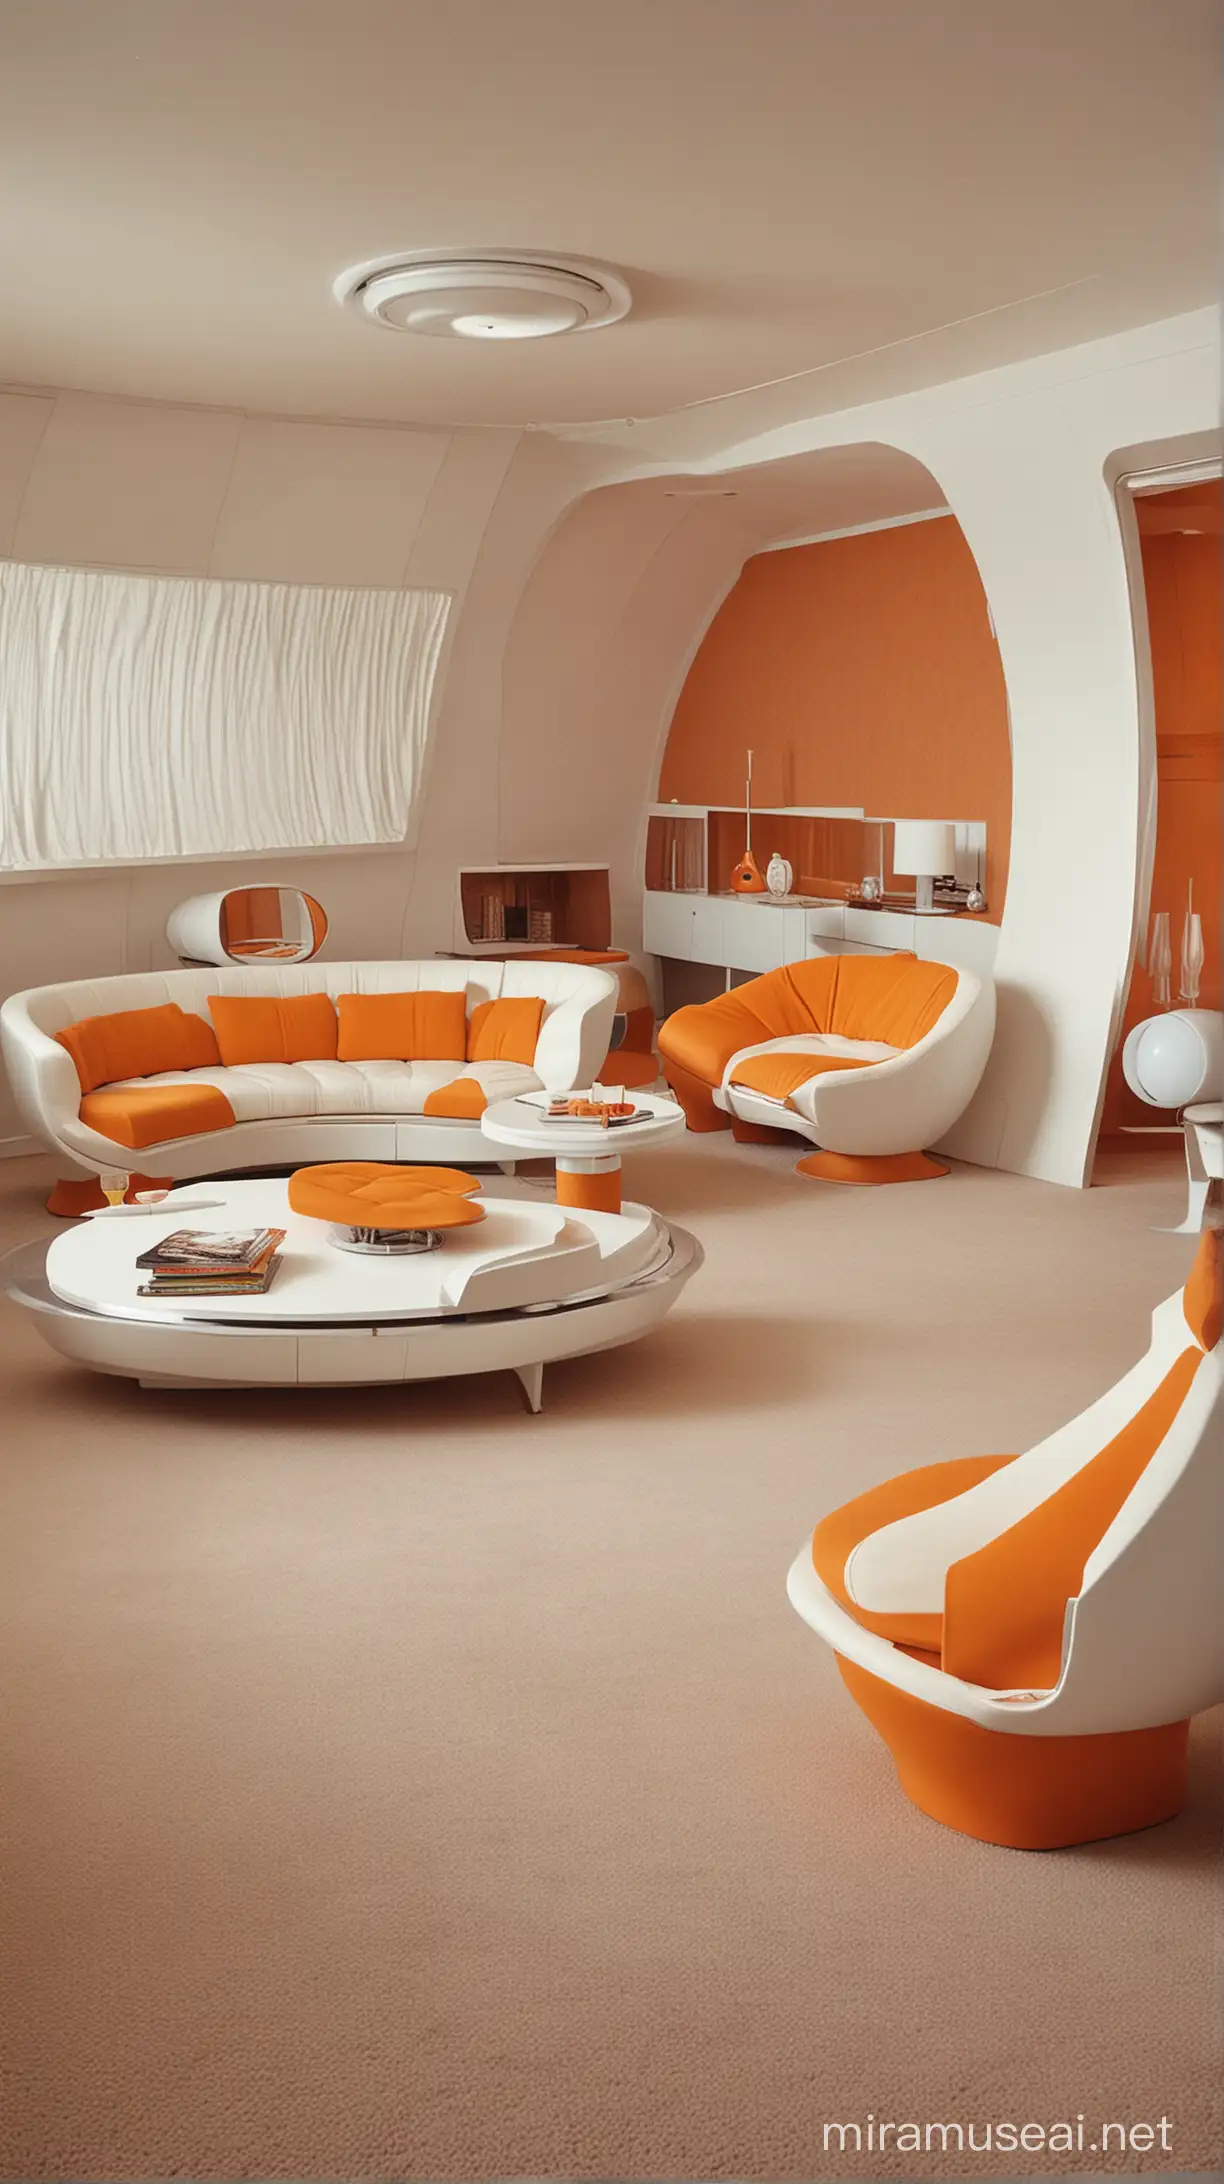 1960s Space Age Minimalistic Lounge Interior